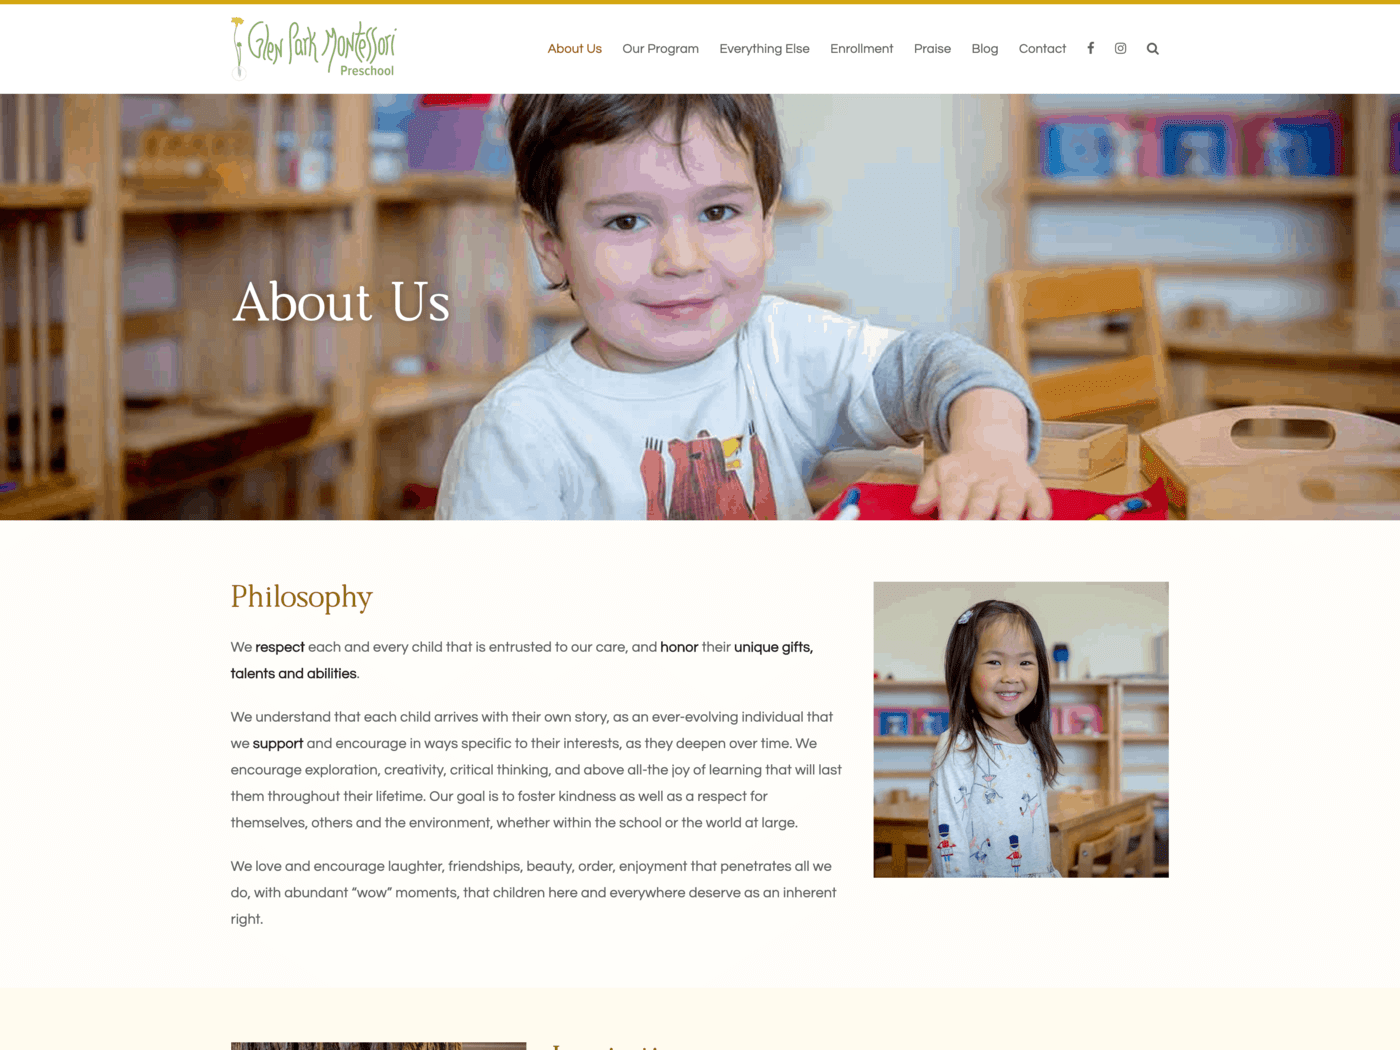 Glen Park Montessori About Us Page